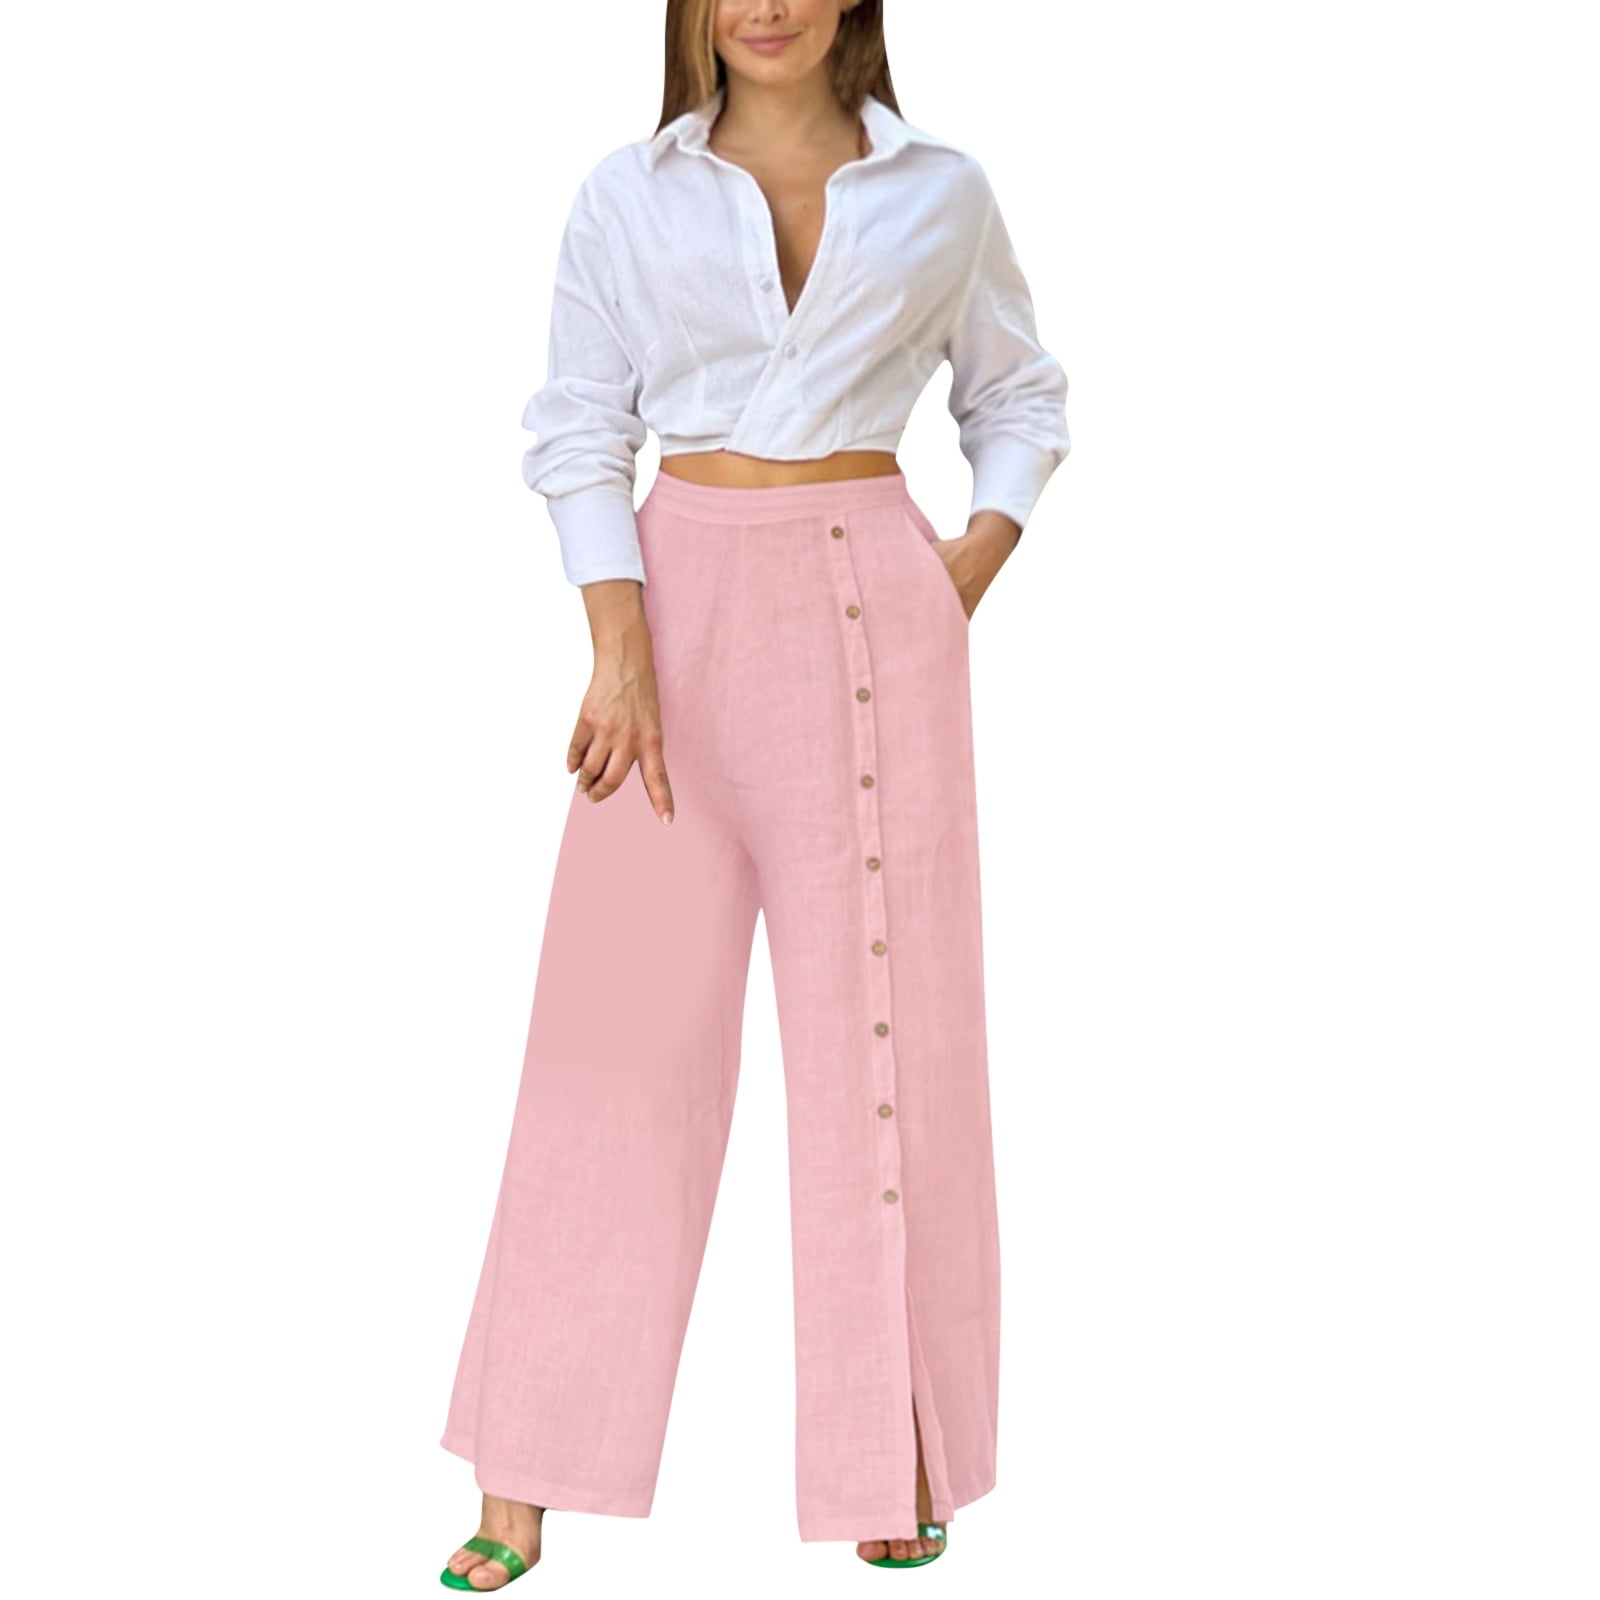 Eashery Women's Casual Linen Pants Drawstring Casual Flowy Pants Athleisure  Pant Women Pants (Print Color,Hot Pink,XL) 